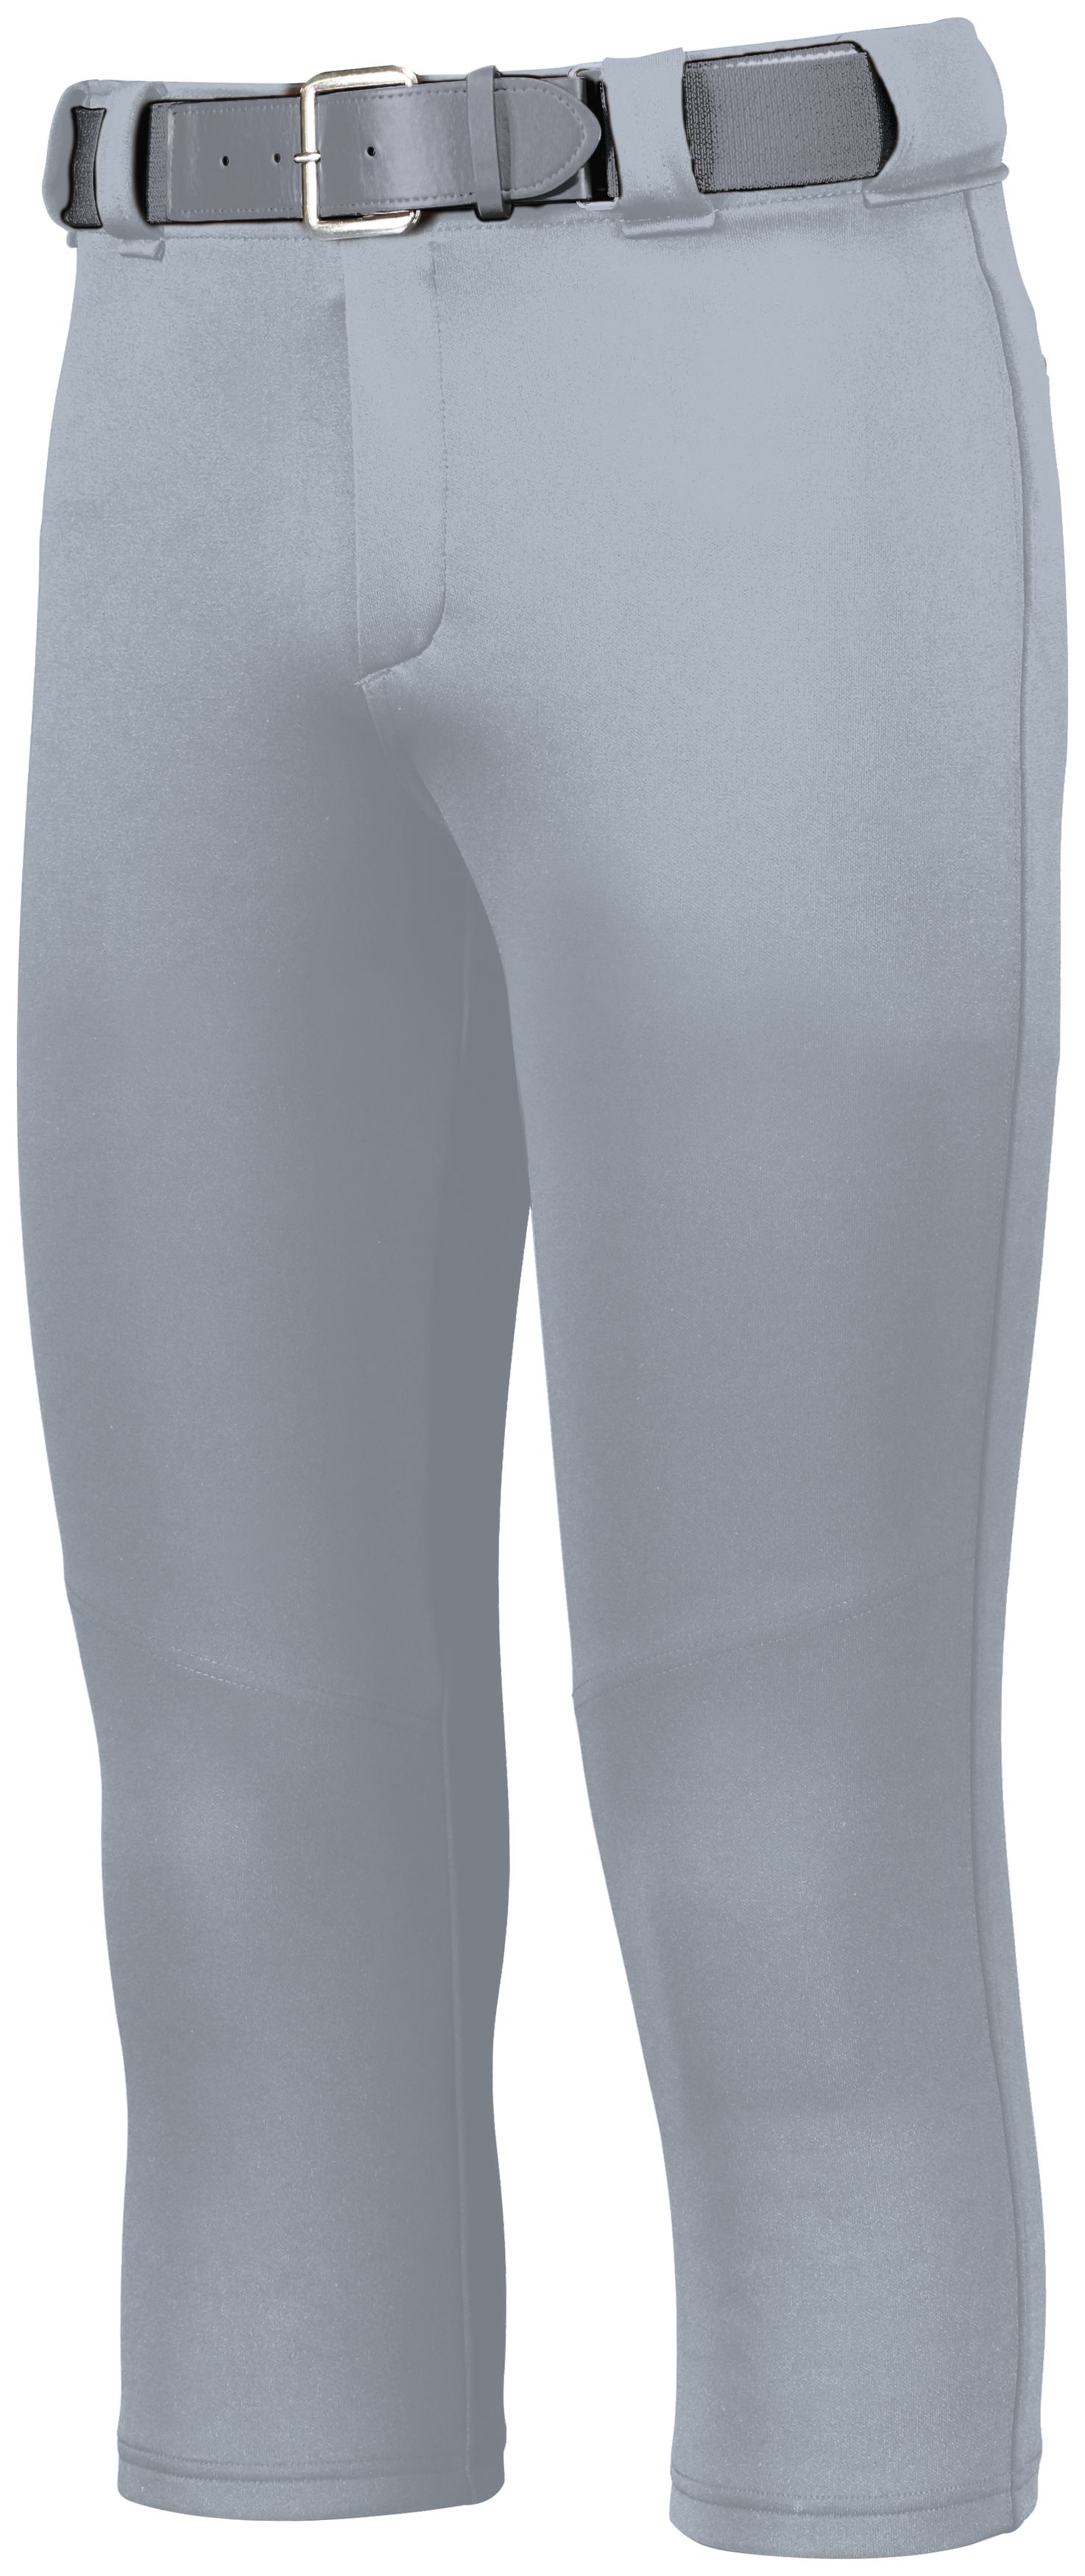 Augusta Sportswear Girls Athletic Casual Polyester Sport Softball Pant 1241 